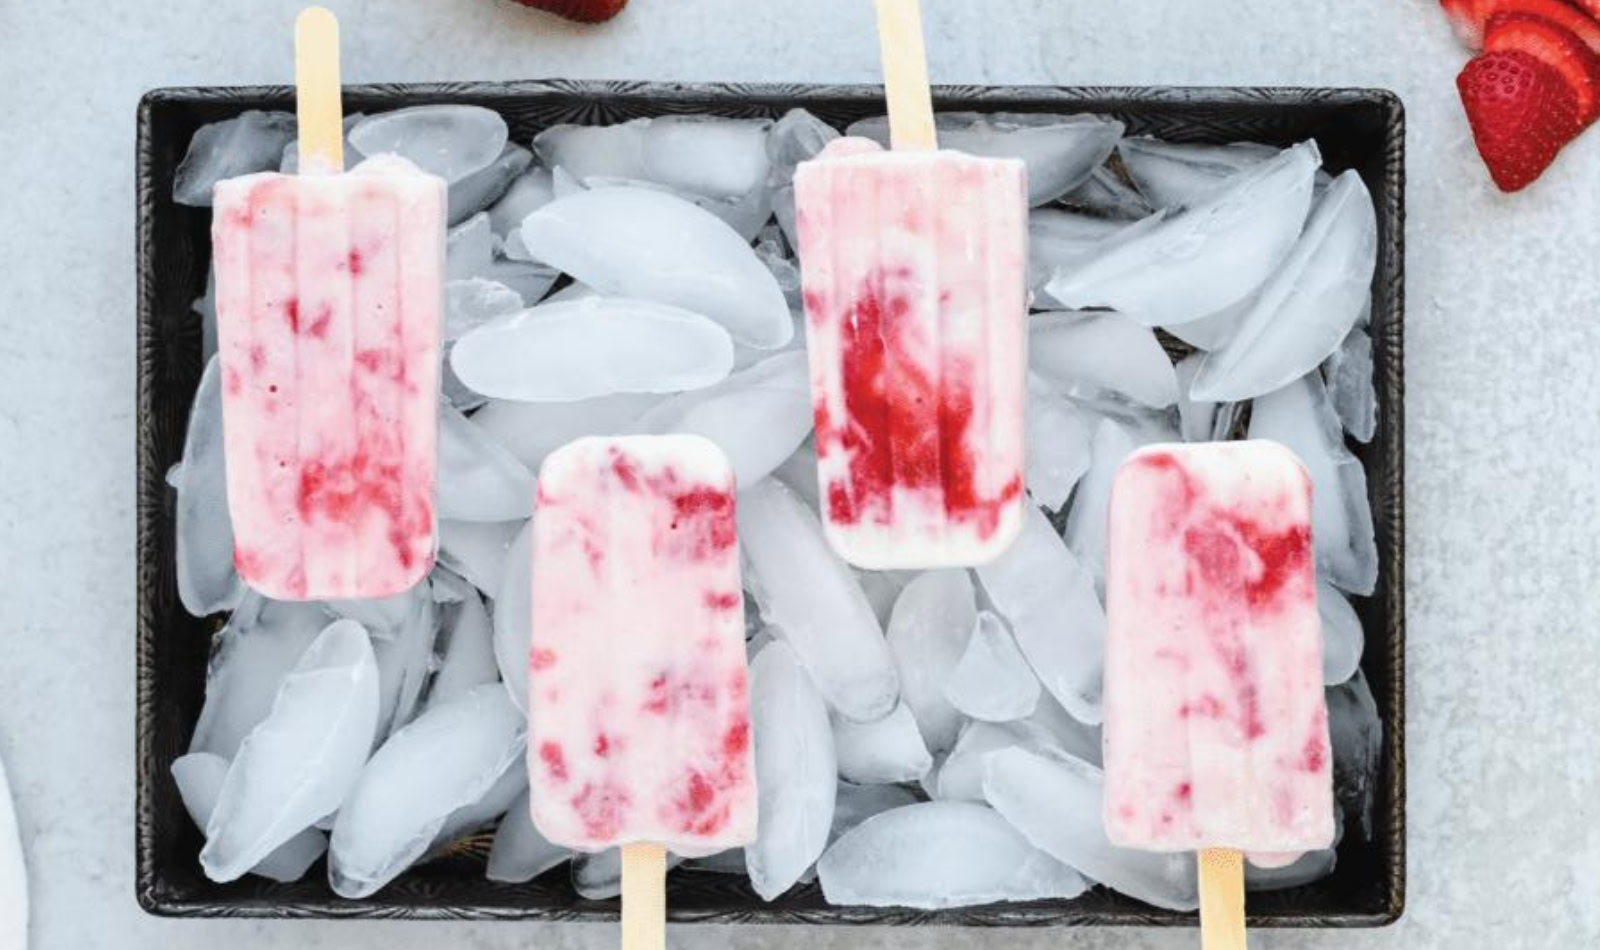 a panful of ice displaying strawberry yogurt popsicles